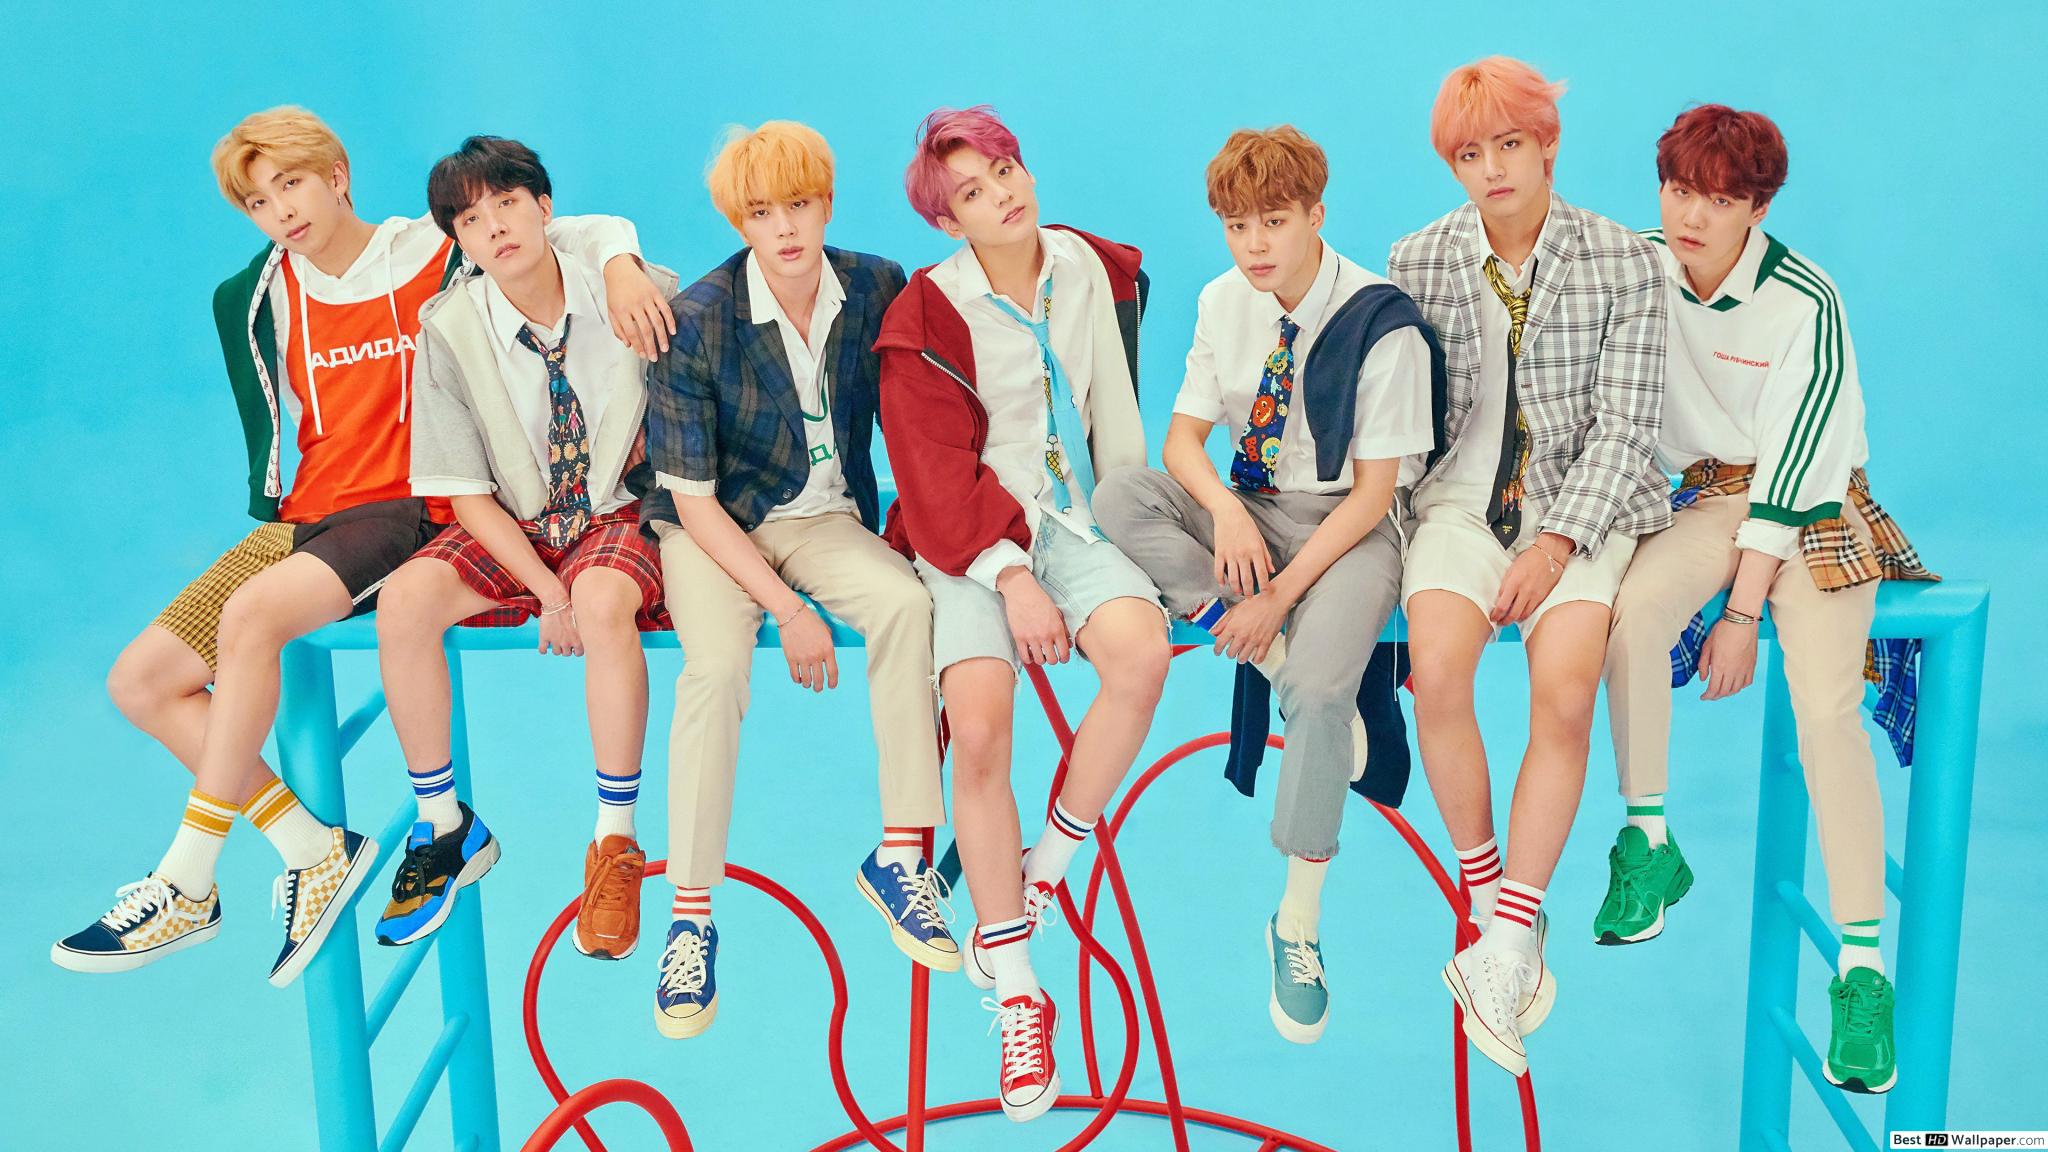 BTS (Bangtan Boys) Members in 'Love Yourself: Answer' MV HD wallpaper download